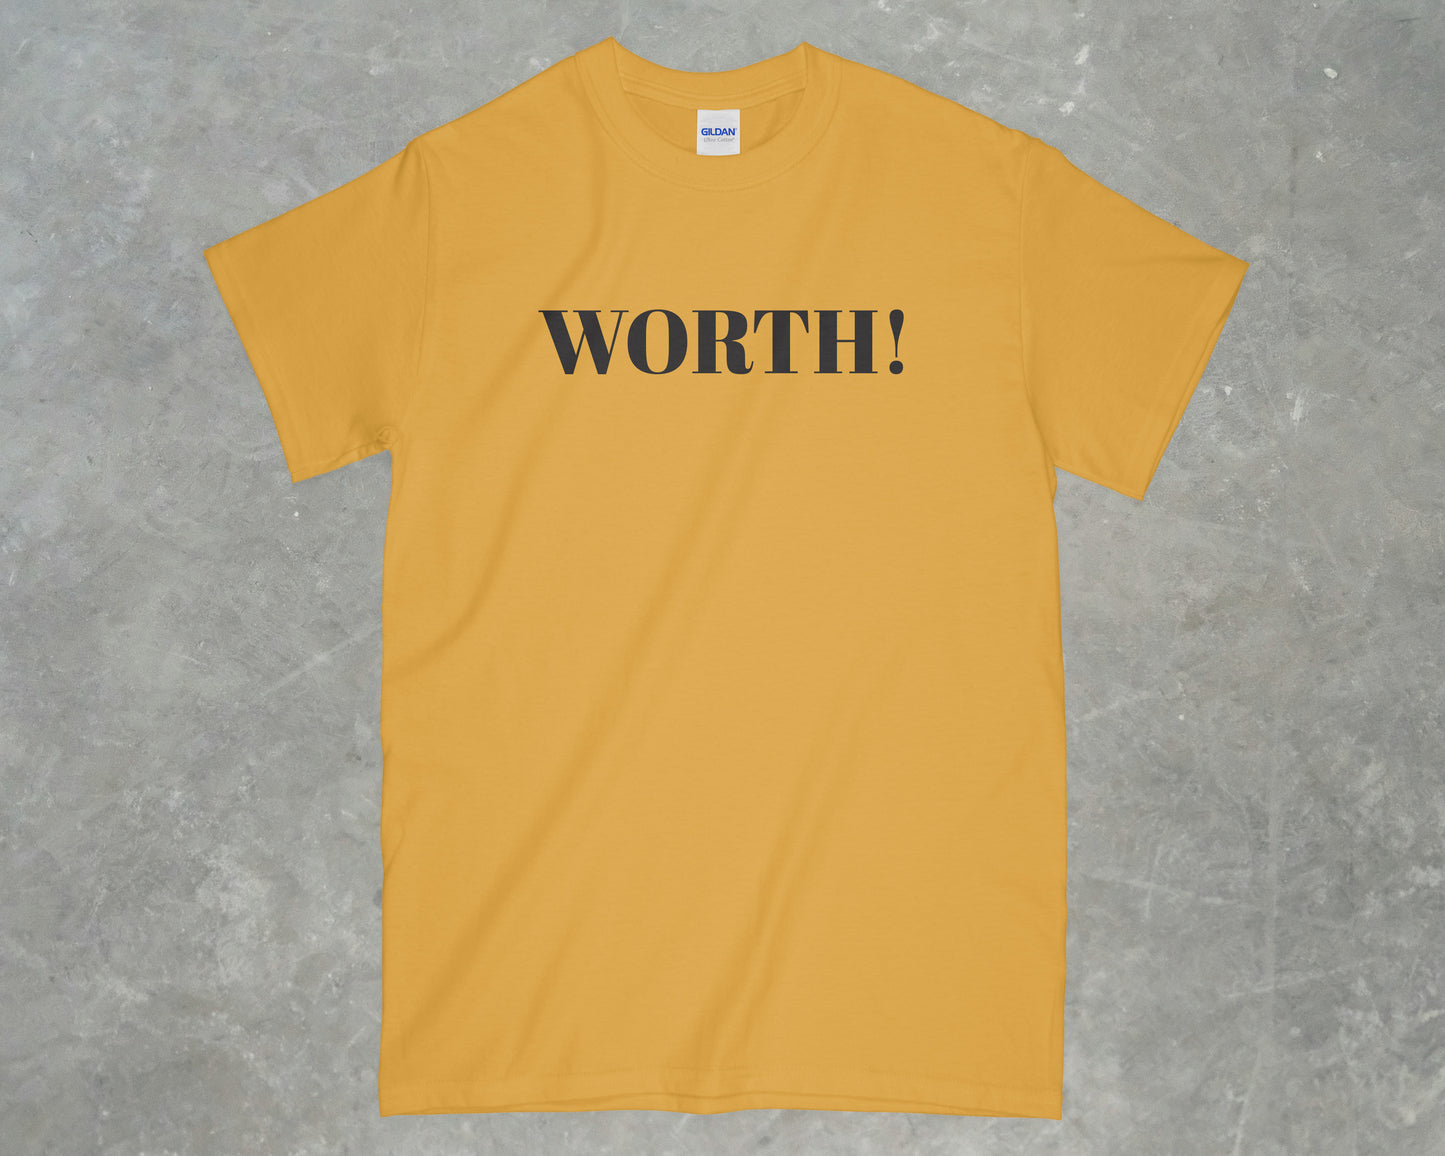 Worth! Shirt